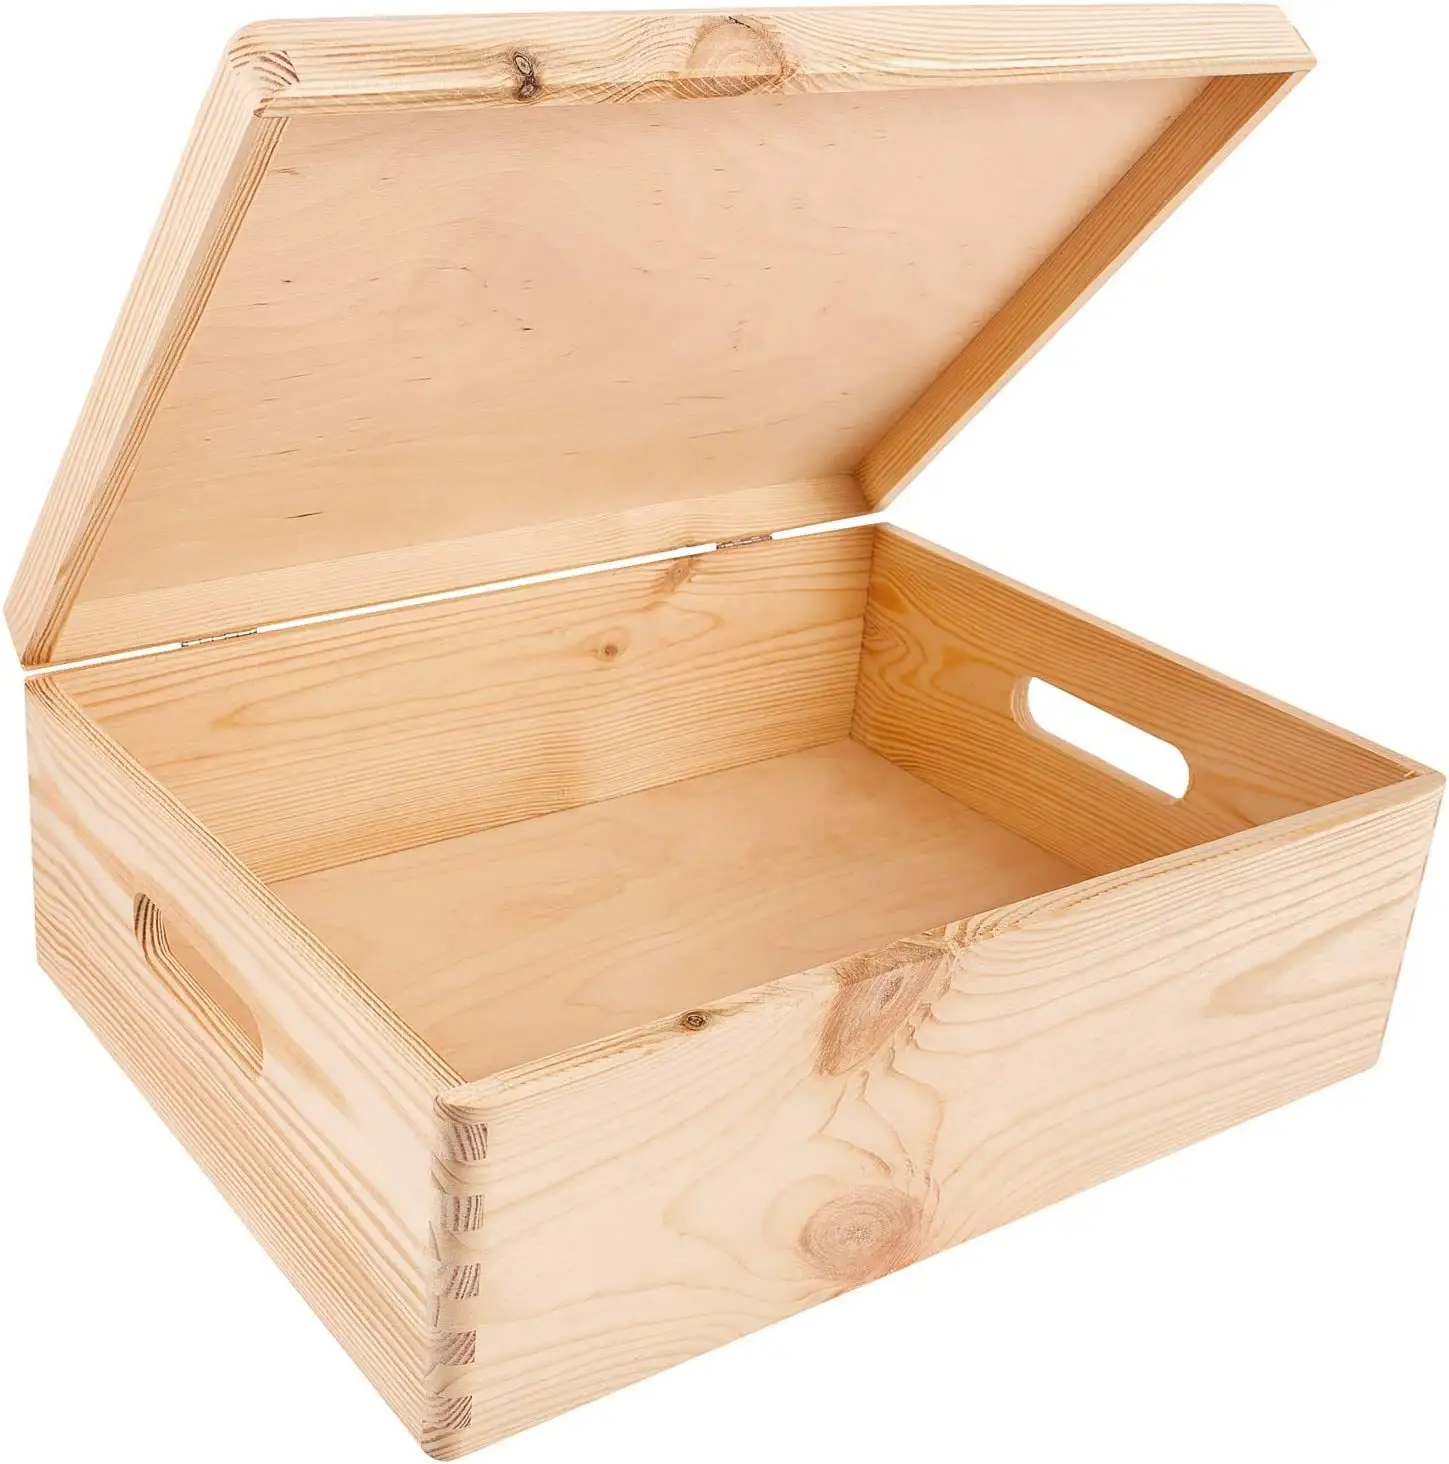 Caja rectangular de madera de pino personalizada sin terminar, caja de almacenamiento artesanal Natural artesanal con tapa con bisagras